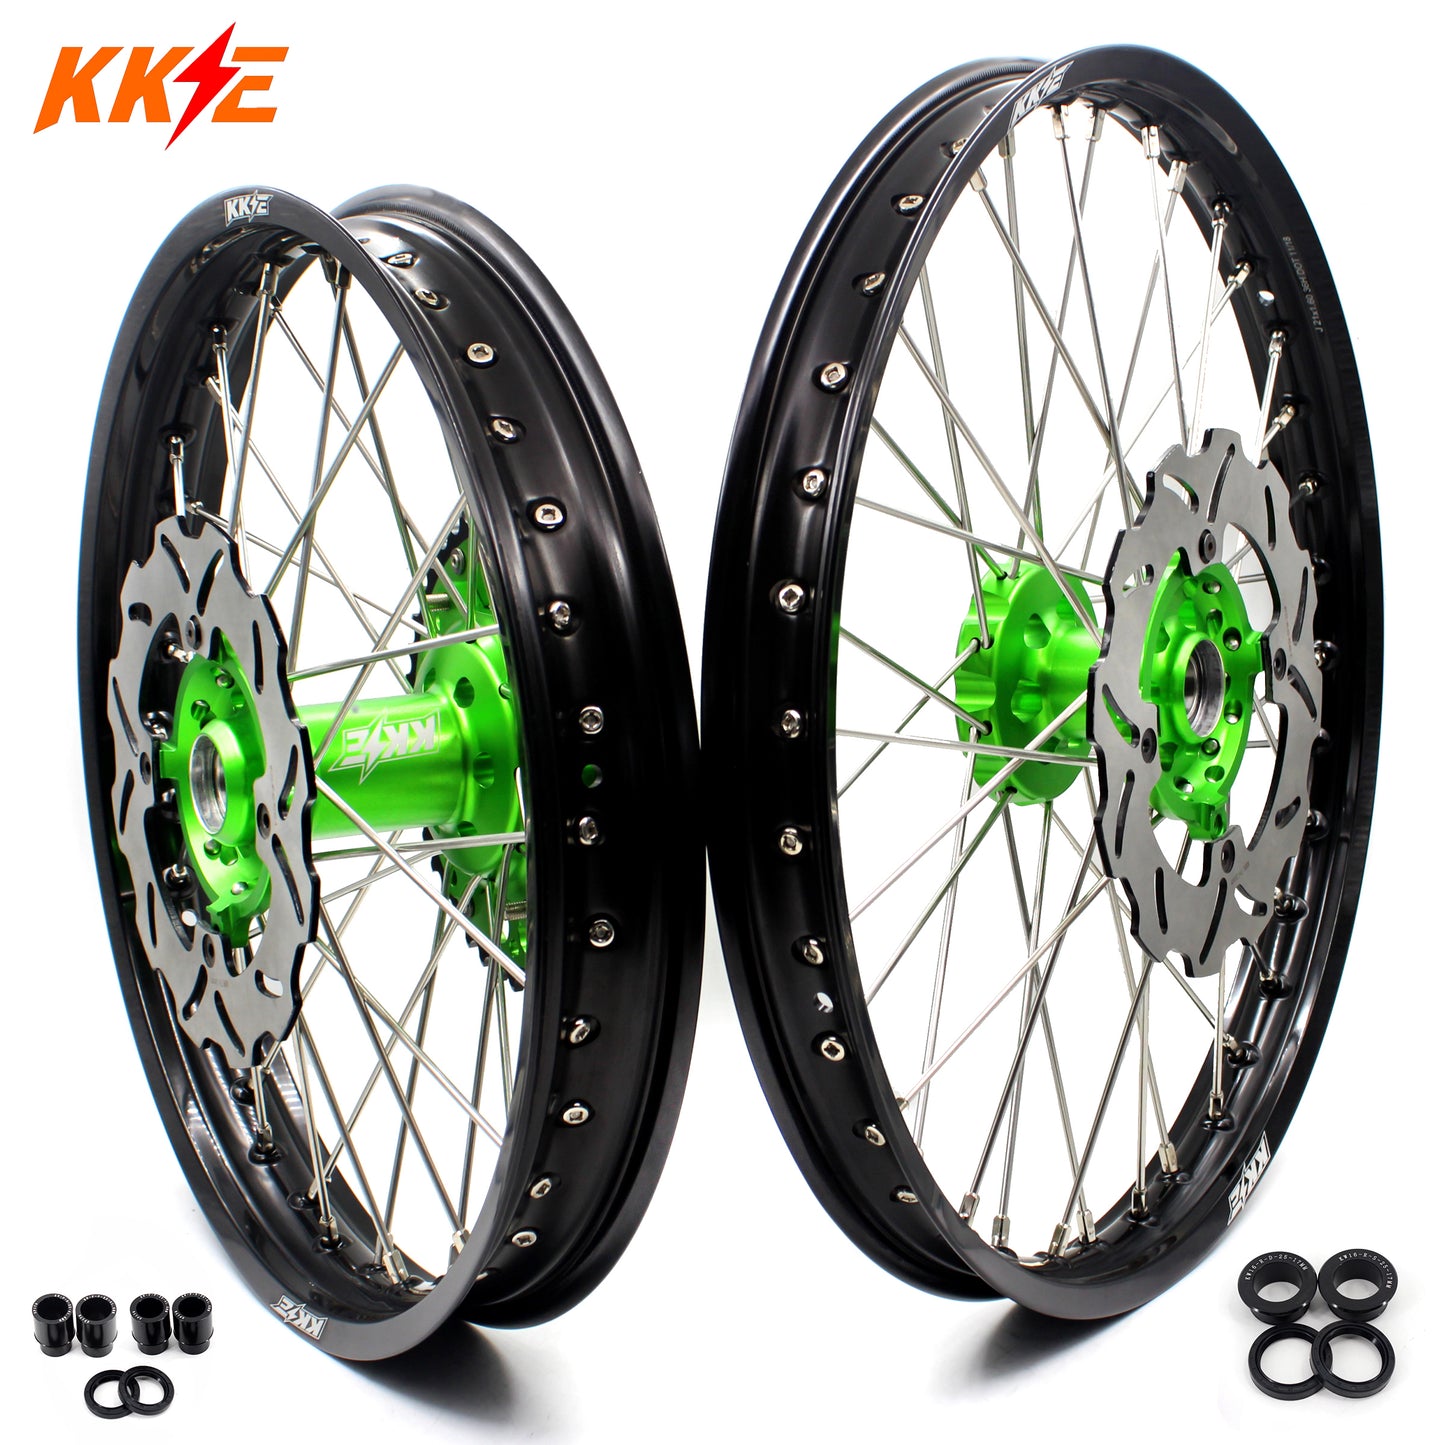 KKE 21/19 MX Spoked Wheels For KAWASAKI KX125 KX250 2003 2004 2005 Disc